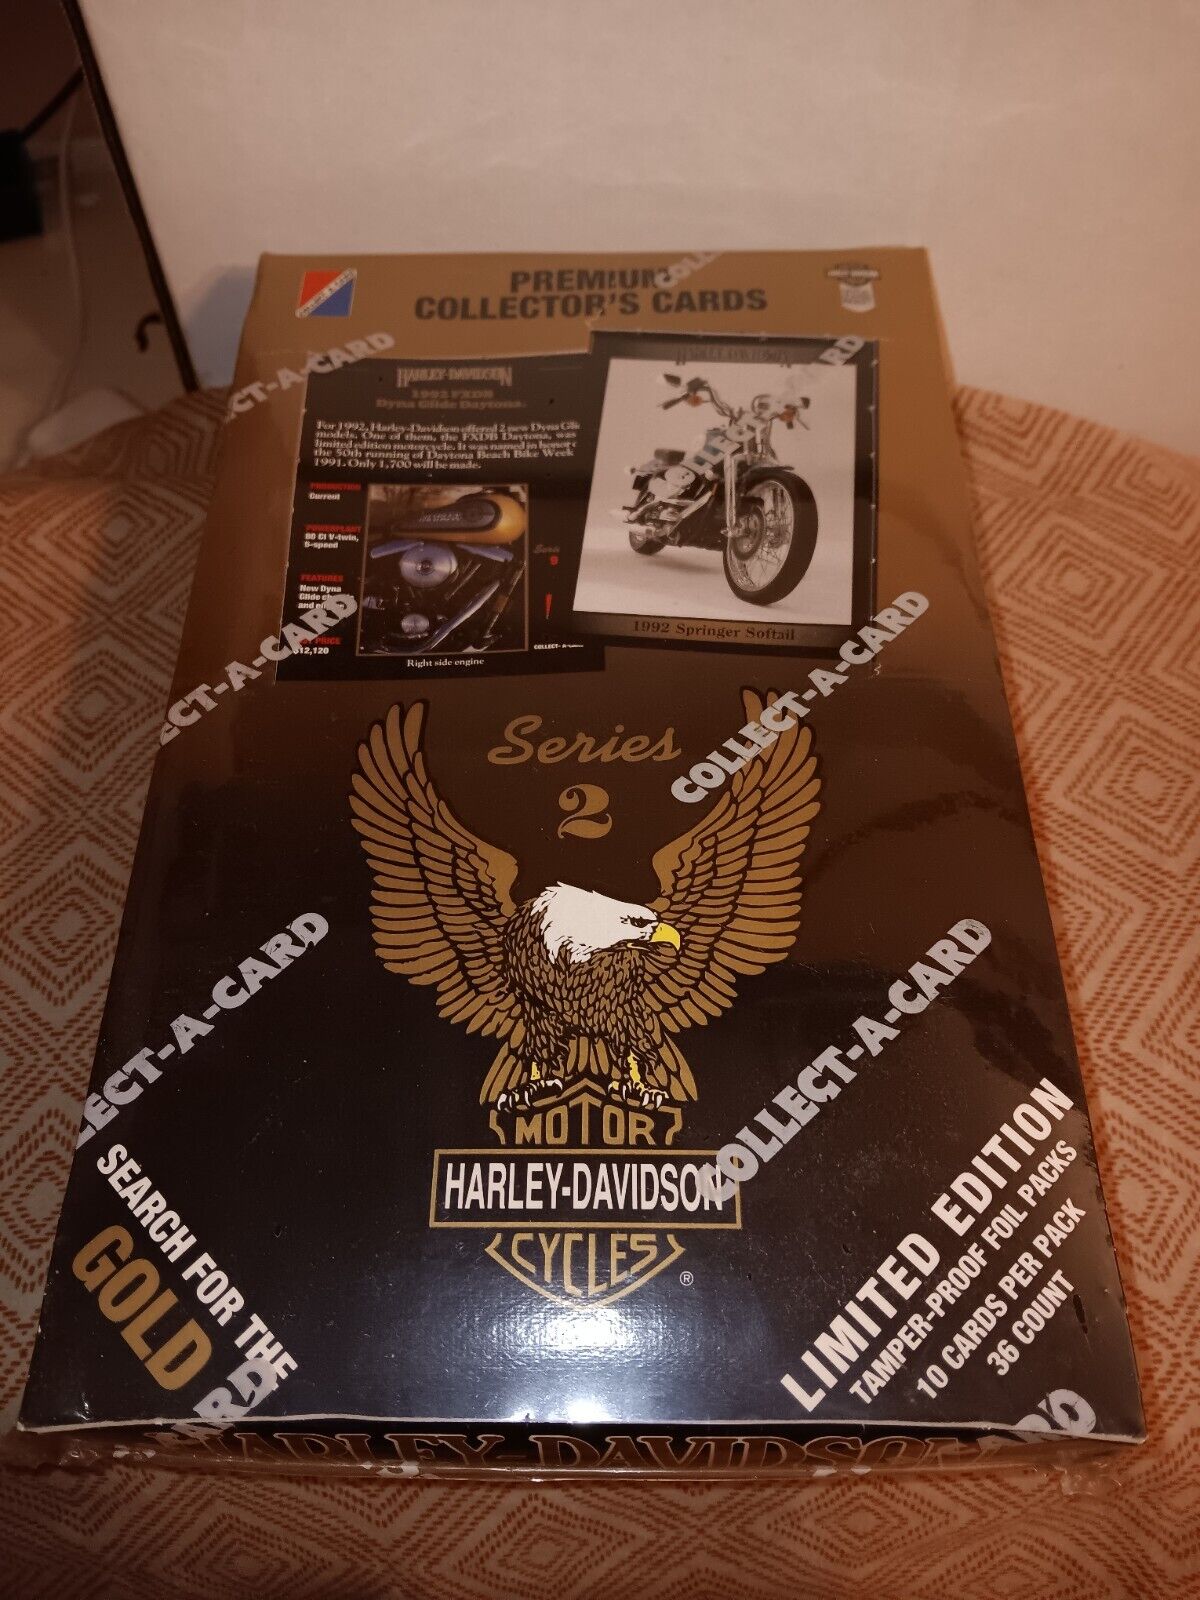 1992 Harley Davidson Motorcycle Trading Cards Series 2 Sealed Box of 36 Packs